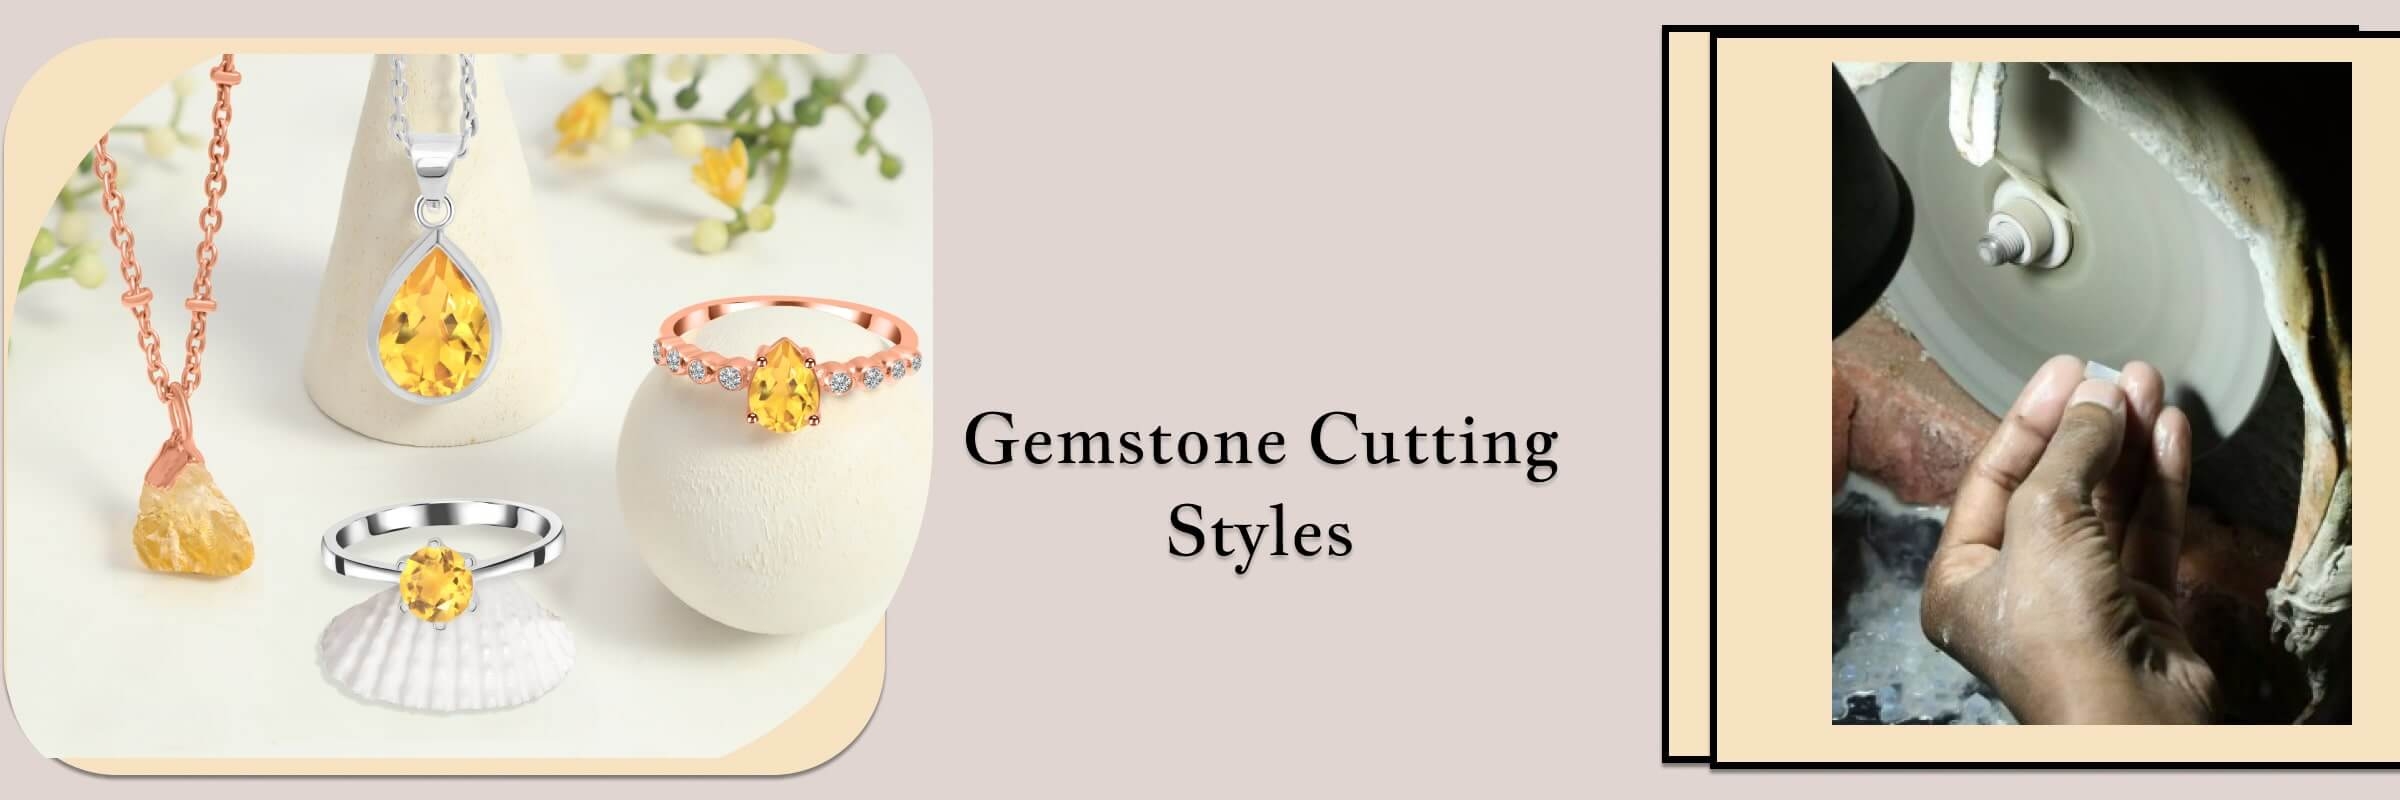 Types of Gemstone Cutting